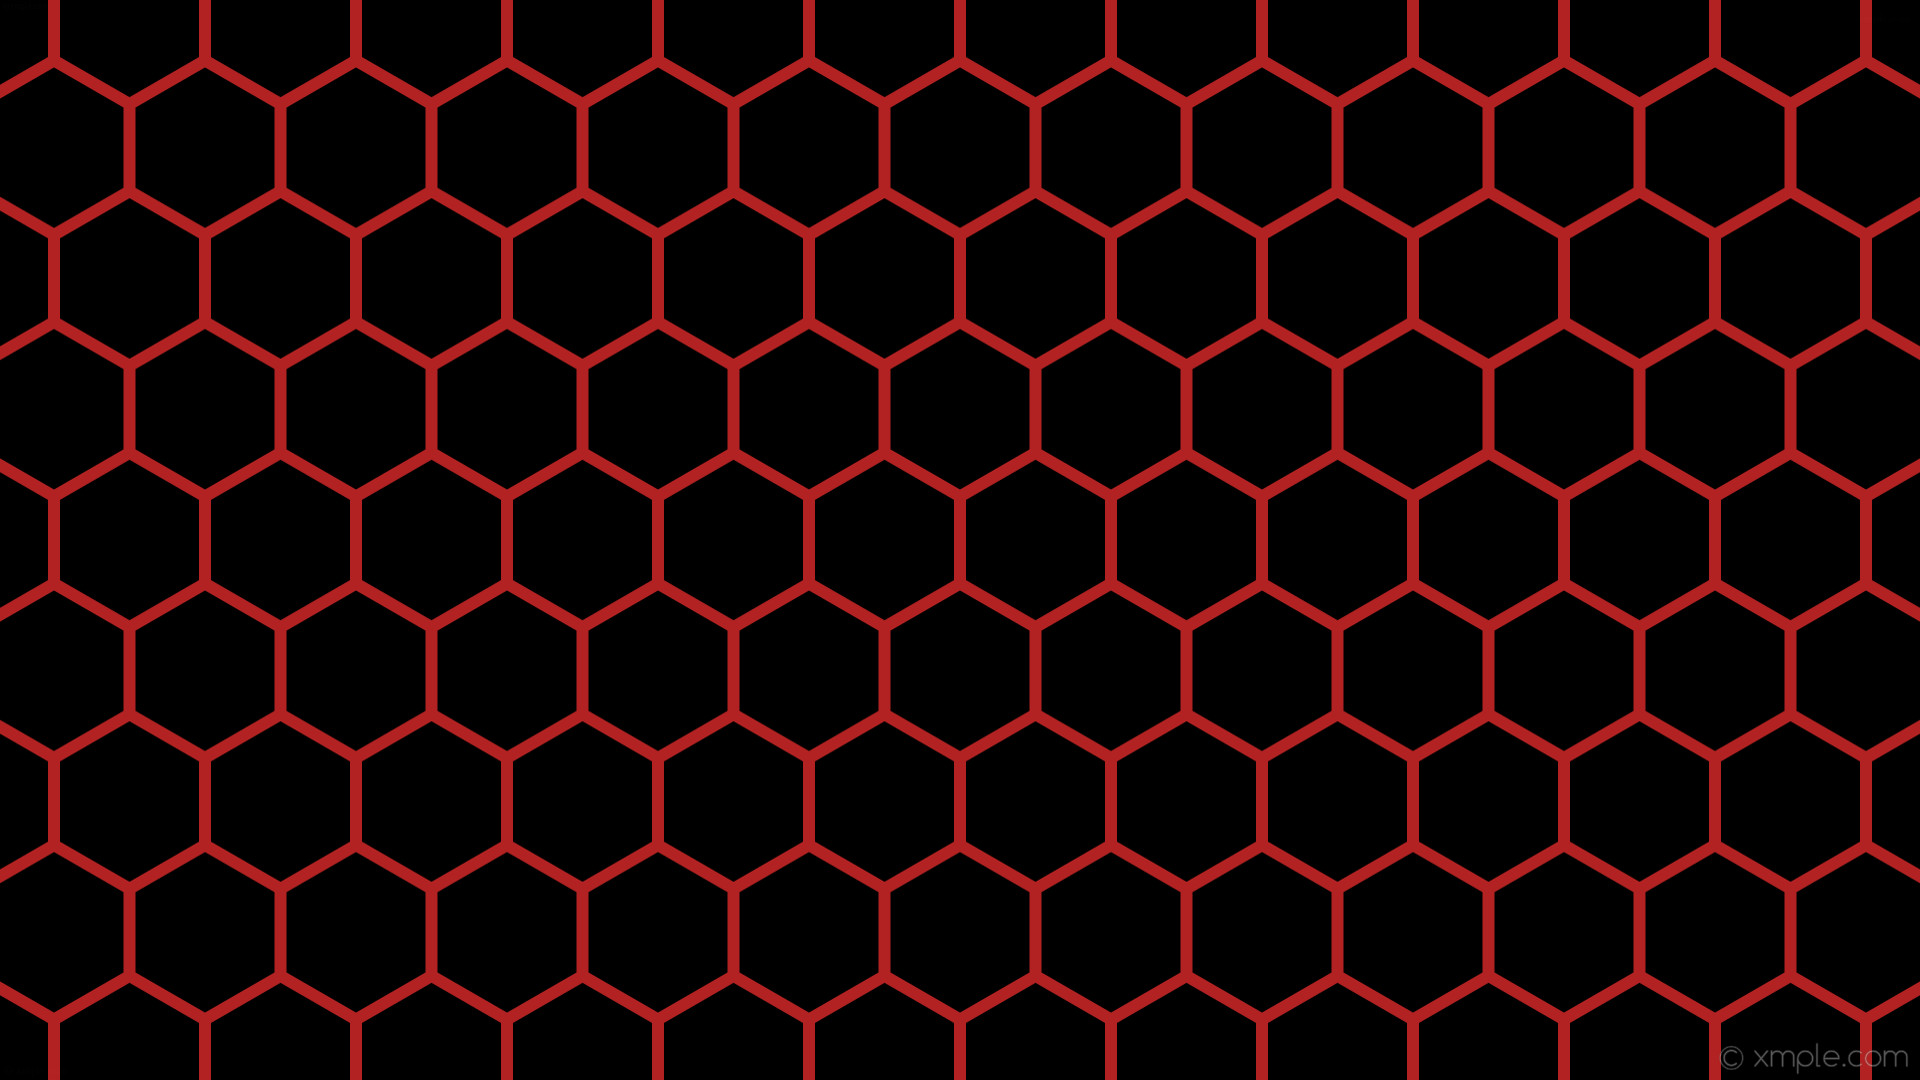 1920x1080 wallpaper beehive red honeycomb hexagon black fire brick #000000 #b22222 0Â°  12px 151px